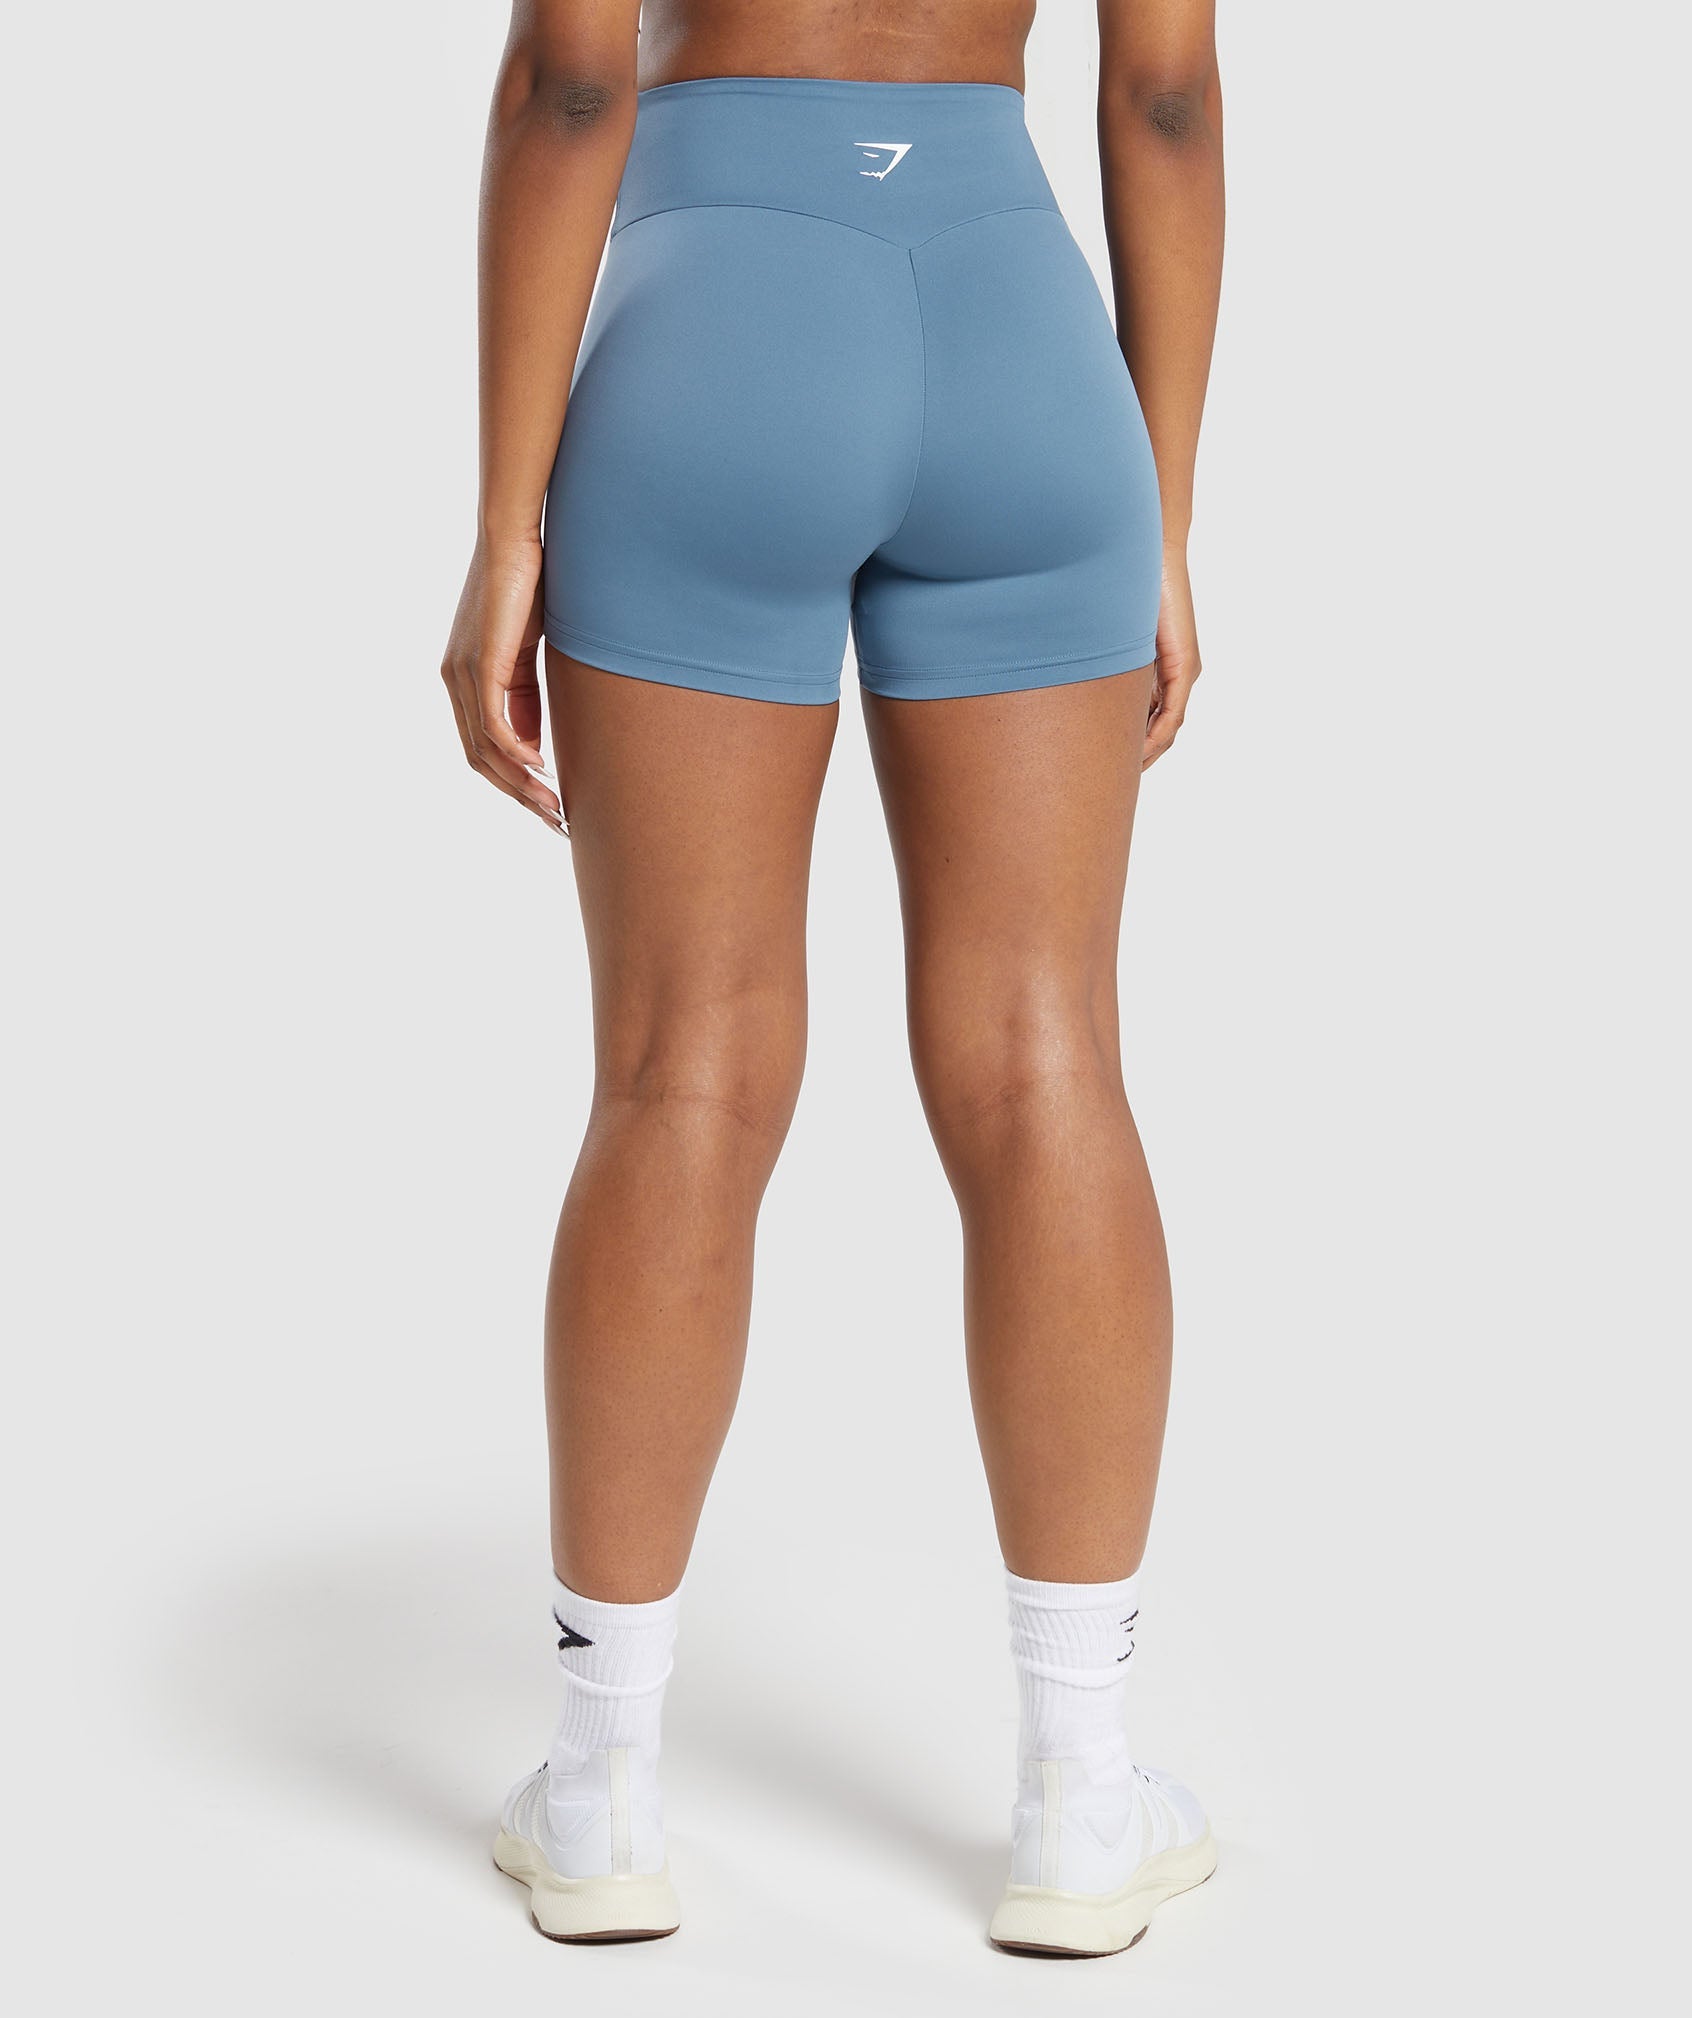 Women's Booty Shorts - Gymshark